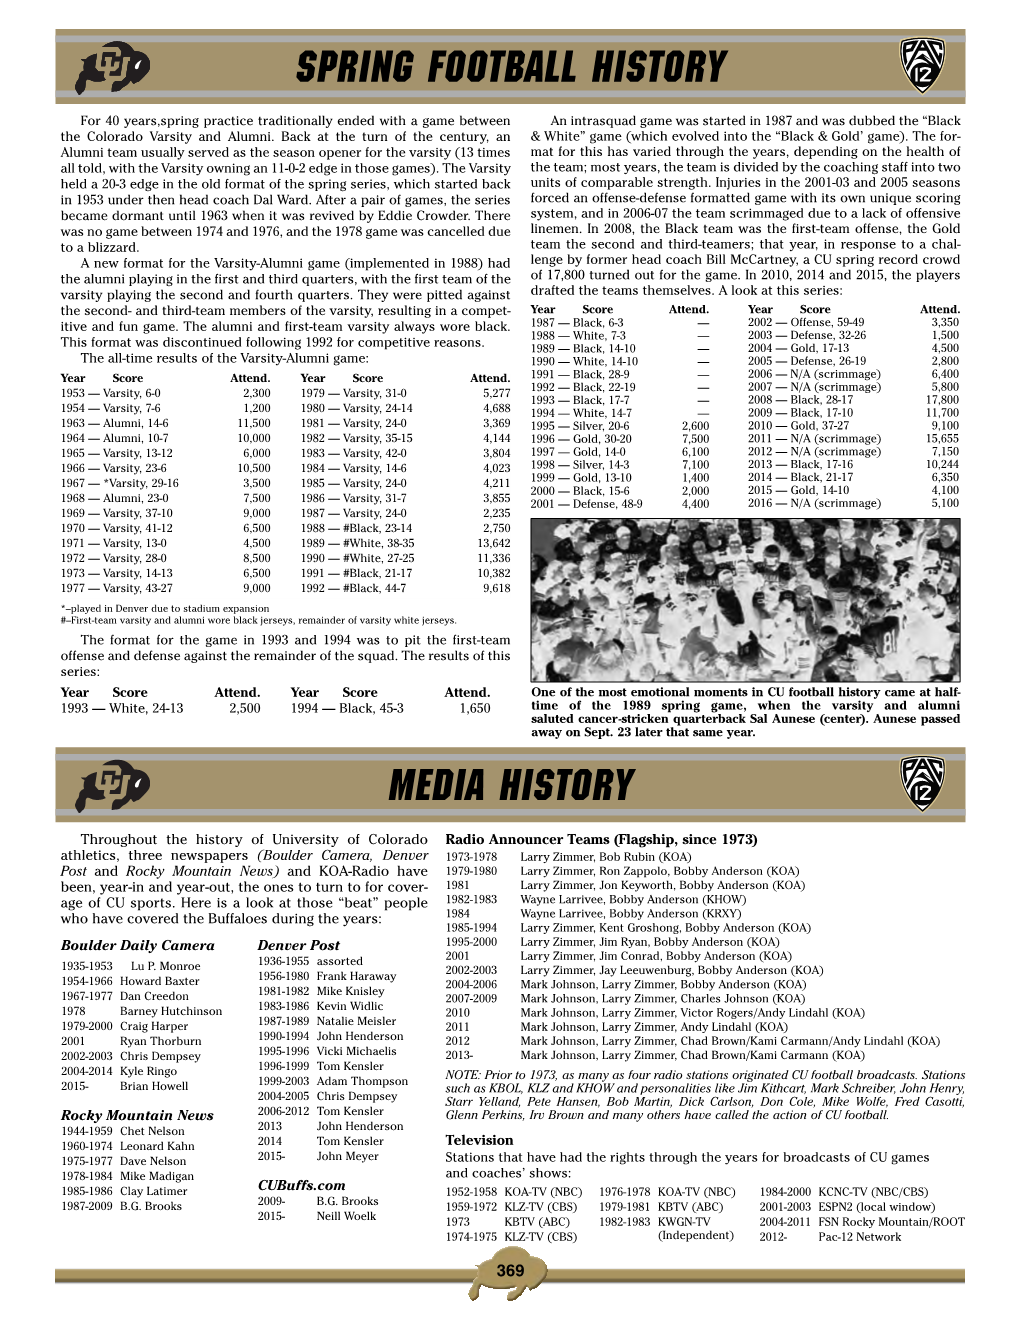 Spring Football History Media History